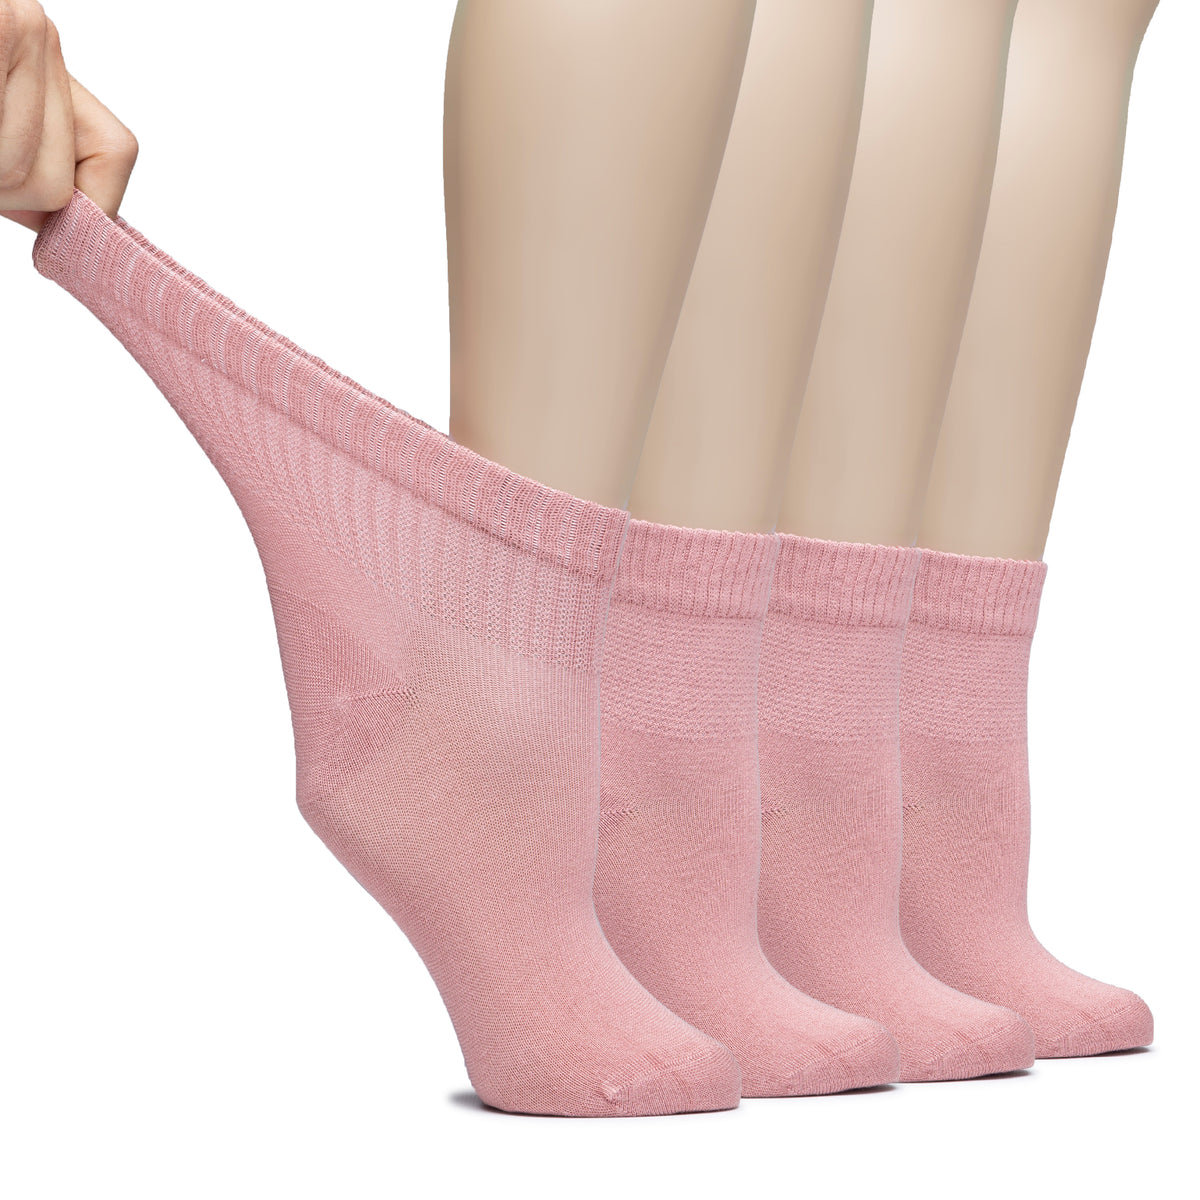 Hugh Ugoli Lightweight Women's Diabetic Ankle Socks Bamboo Thin Socks Seamless Toe and Non-Binding Top, 4 Pairs, , Shoe Size: 6-9/10-12 | Shoe Size: 6-9 | Rose Wood